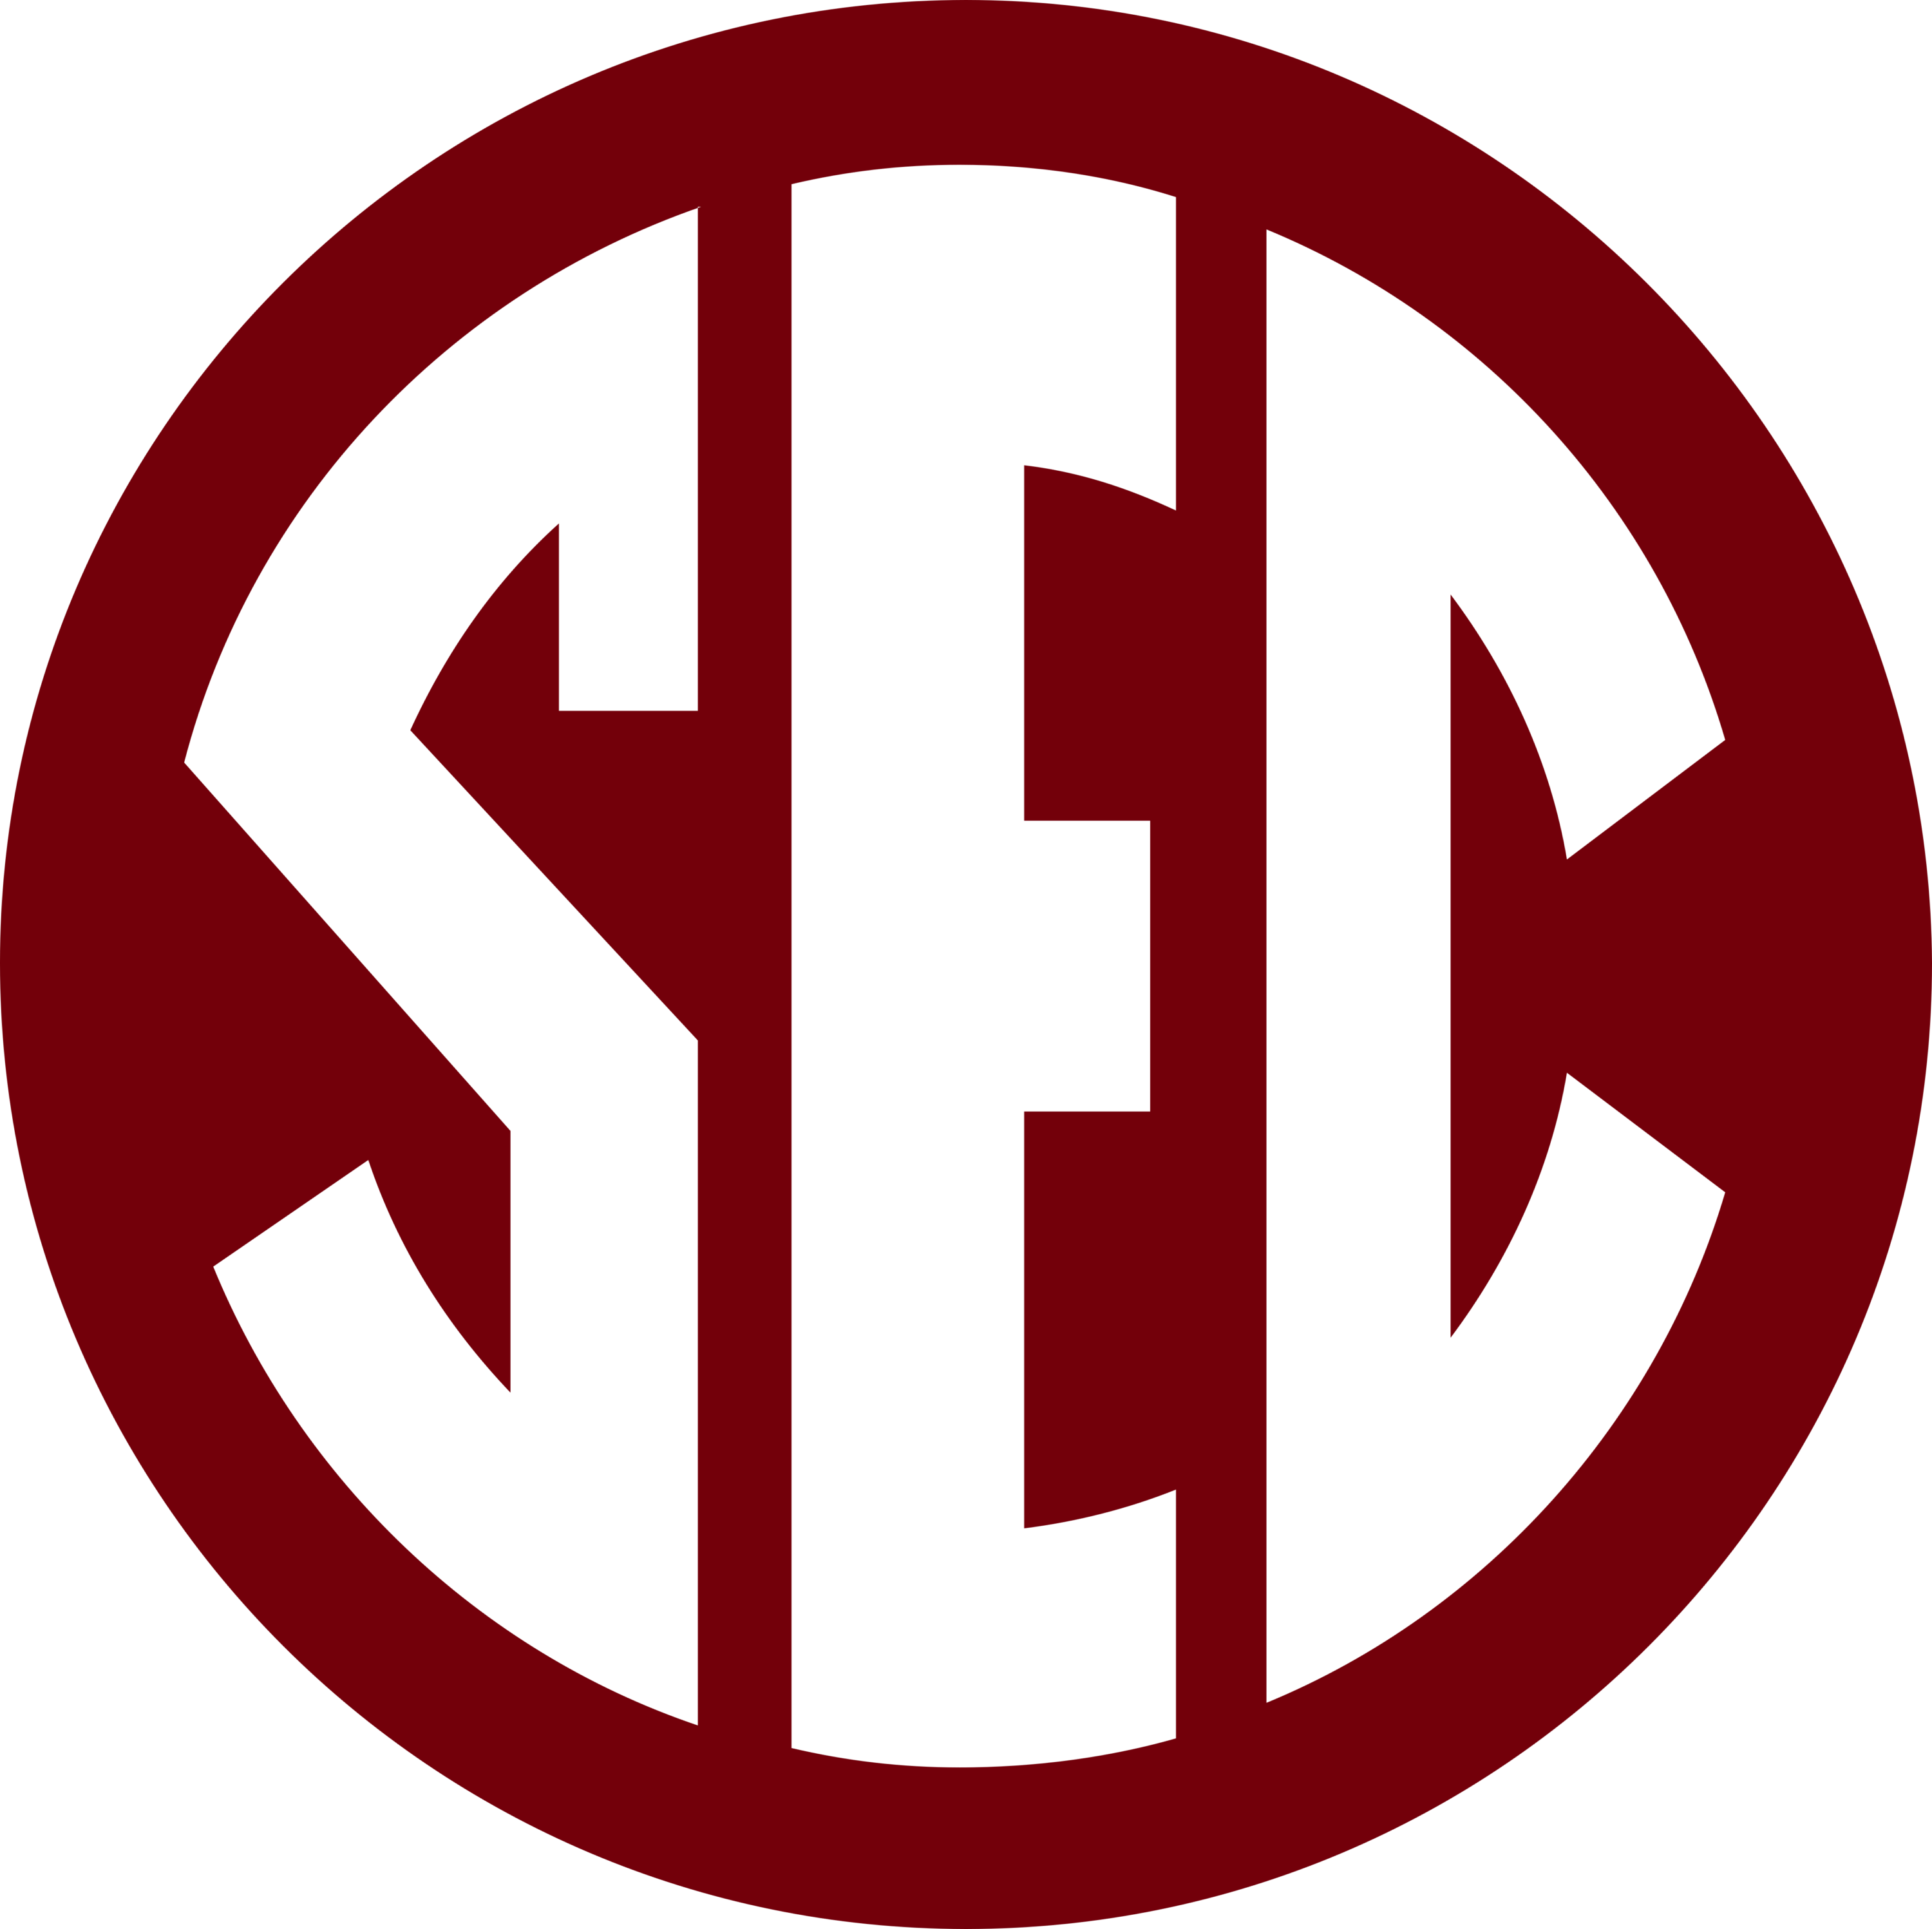 SEC Southeastern Conference Logo